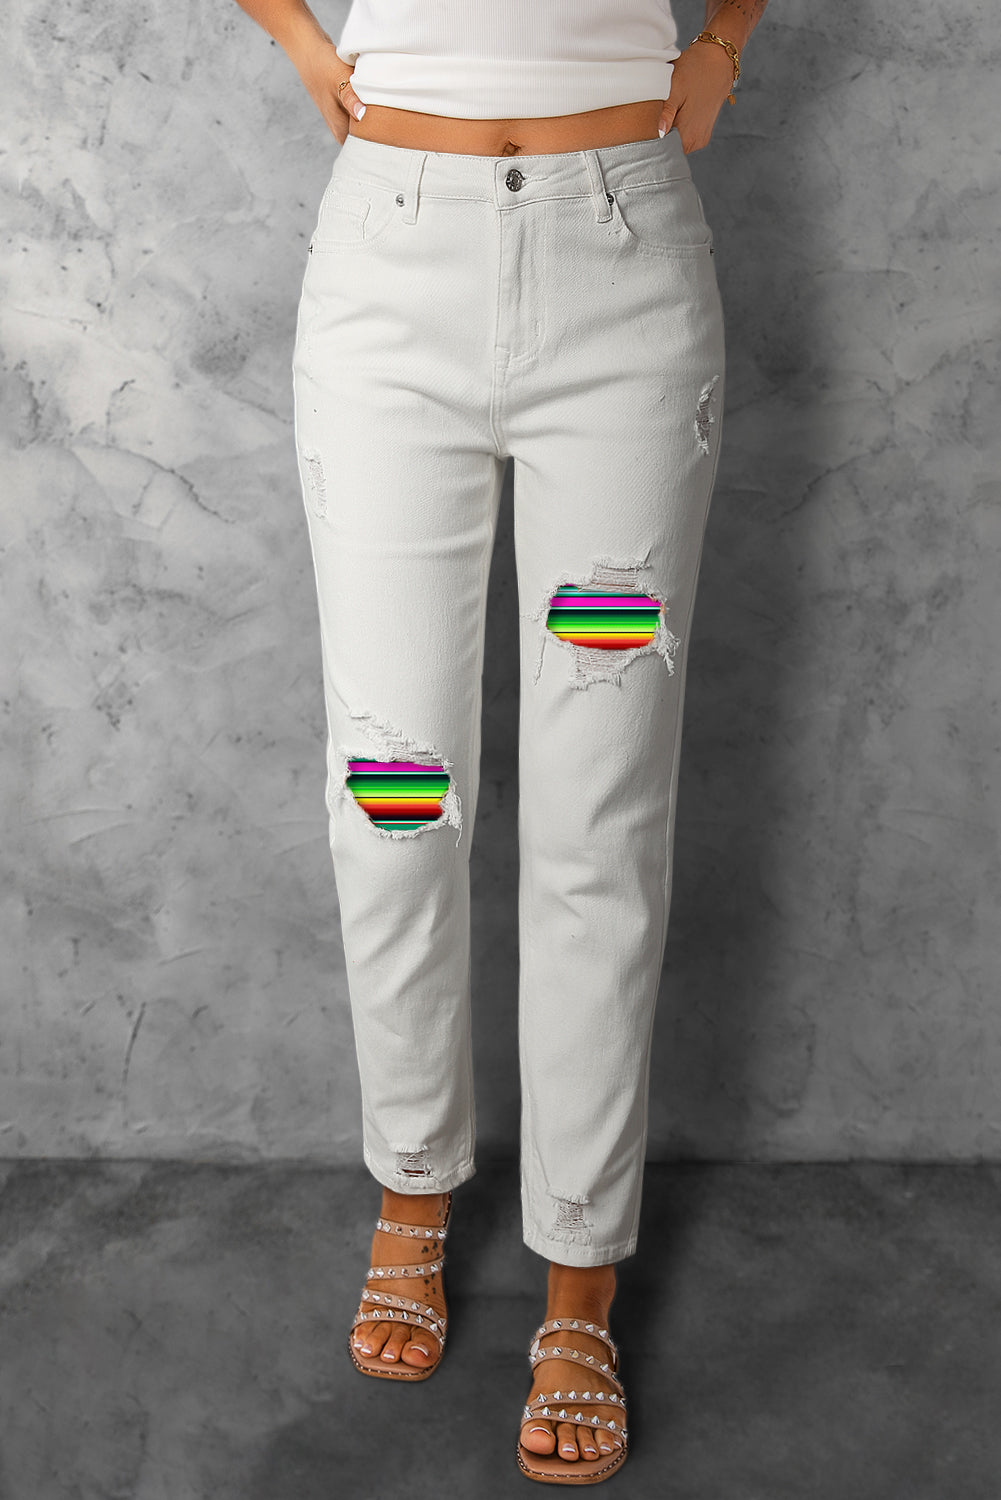 LC7873669-1-S, LC7873669-1-M, LC7873669-1-L, LC7873669-1-XL, LC7873669-1-2XL, White Women Pride Rainbow Print High Waist Skinny Ripped Jeans Destroyed Denim Pants